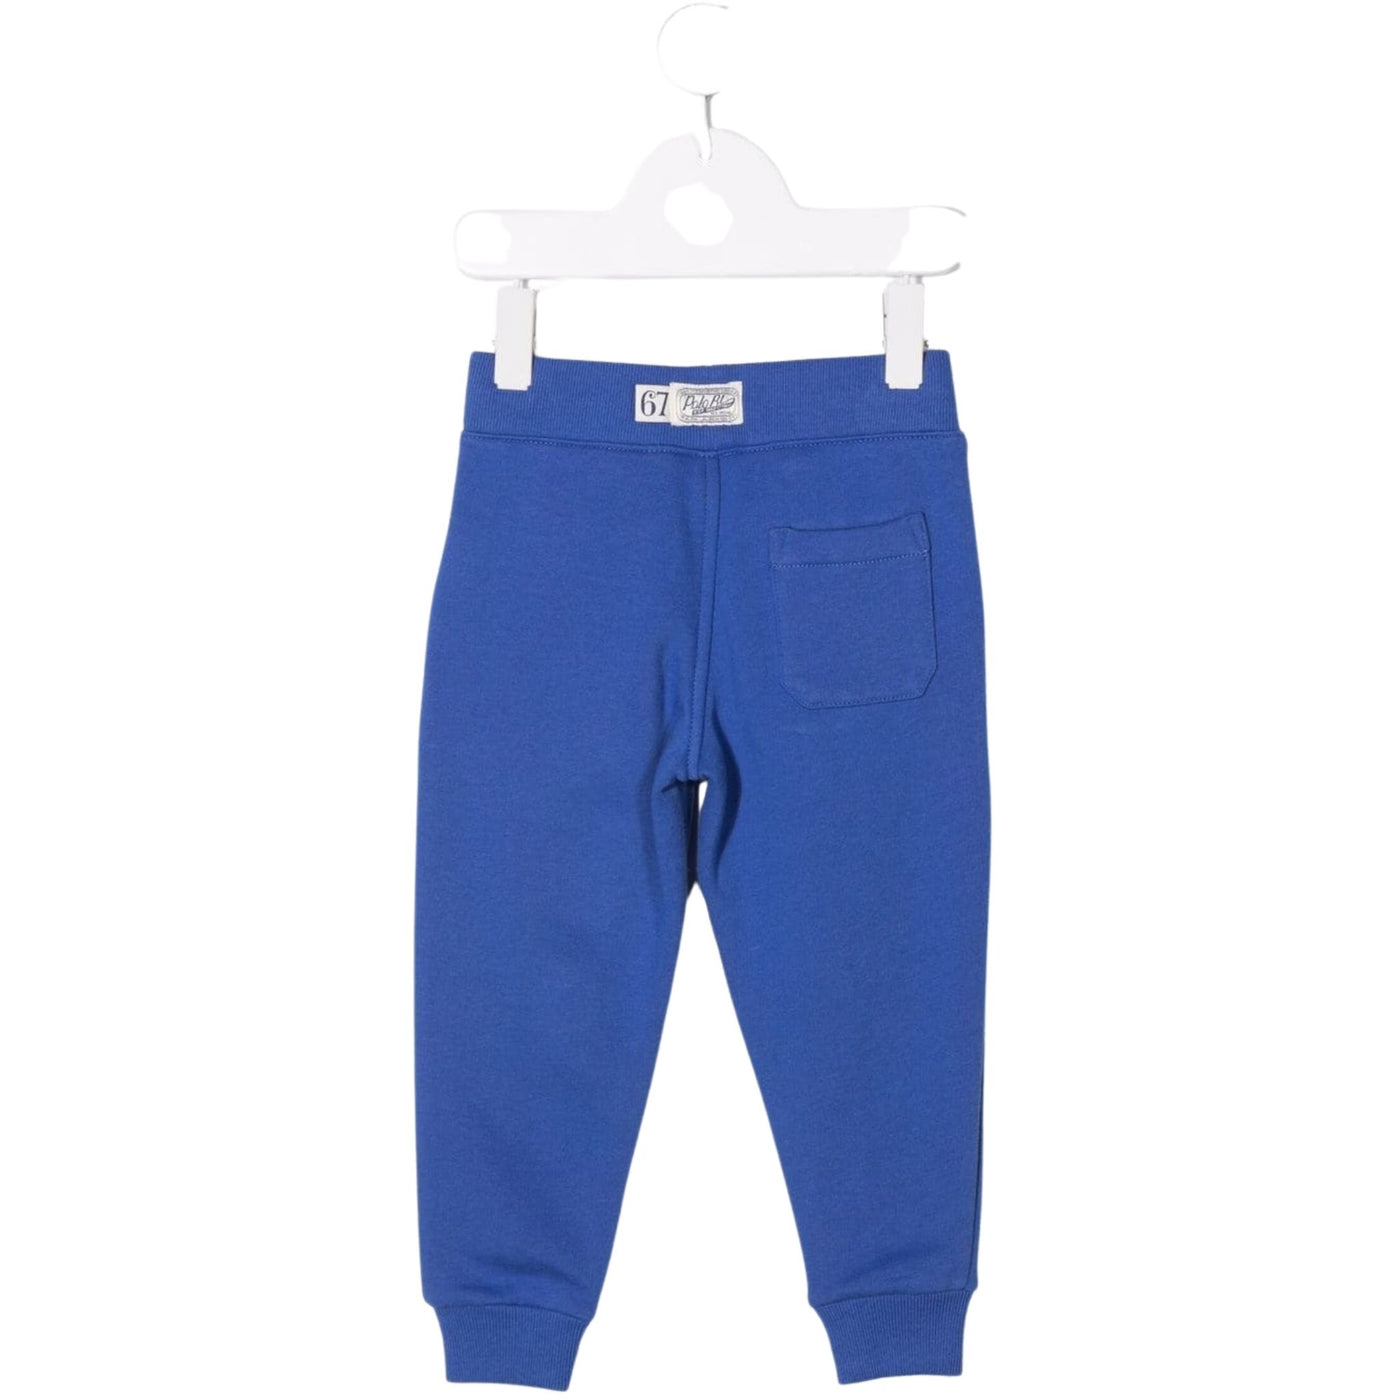 Pantalone bambino azzurro Polo Ralph Lauren vista retro